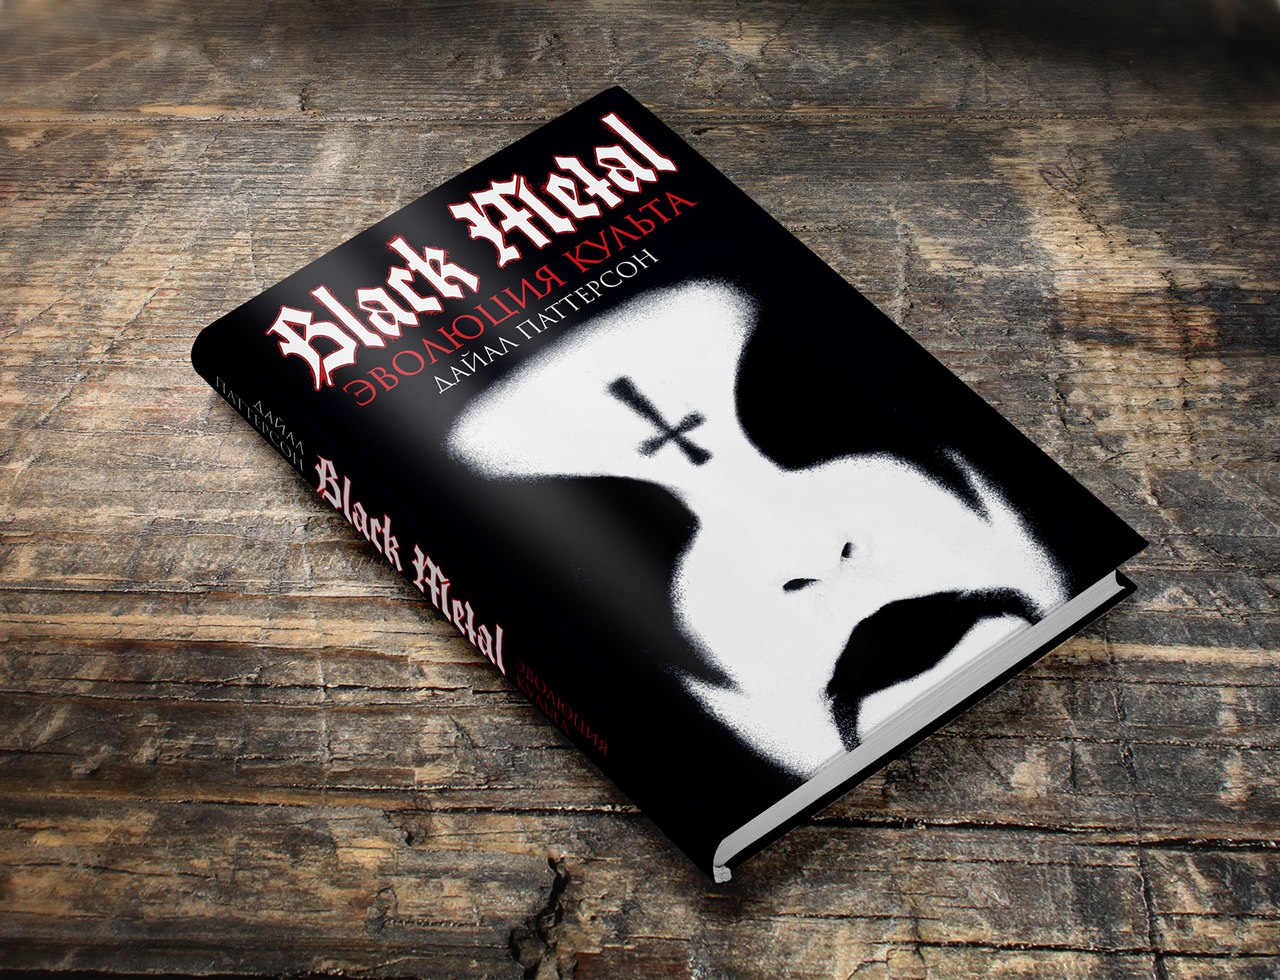 Black Metal: Эволюция Культа Дайал Паттерсон - книга